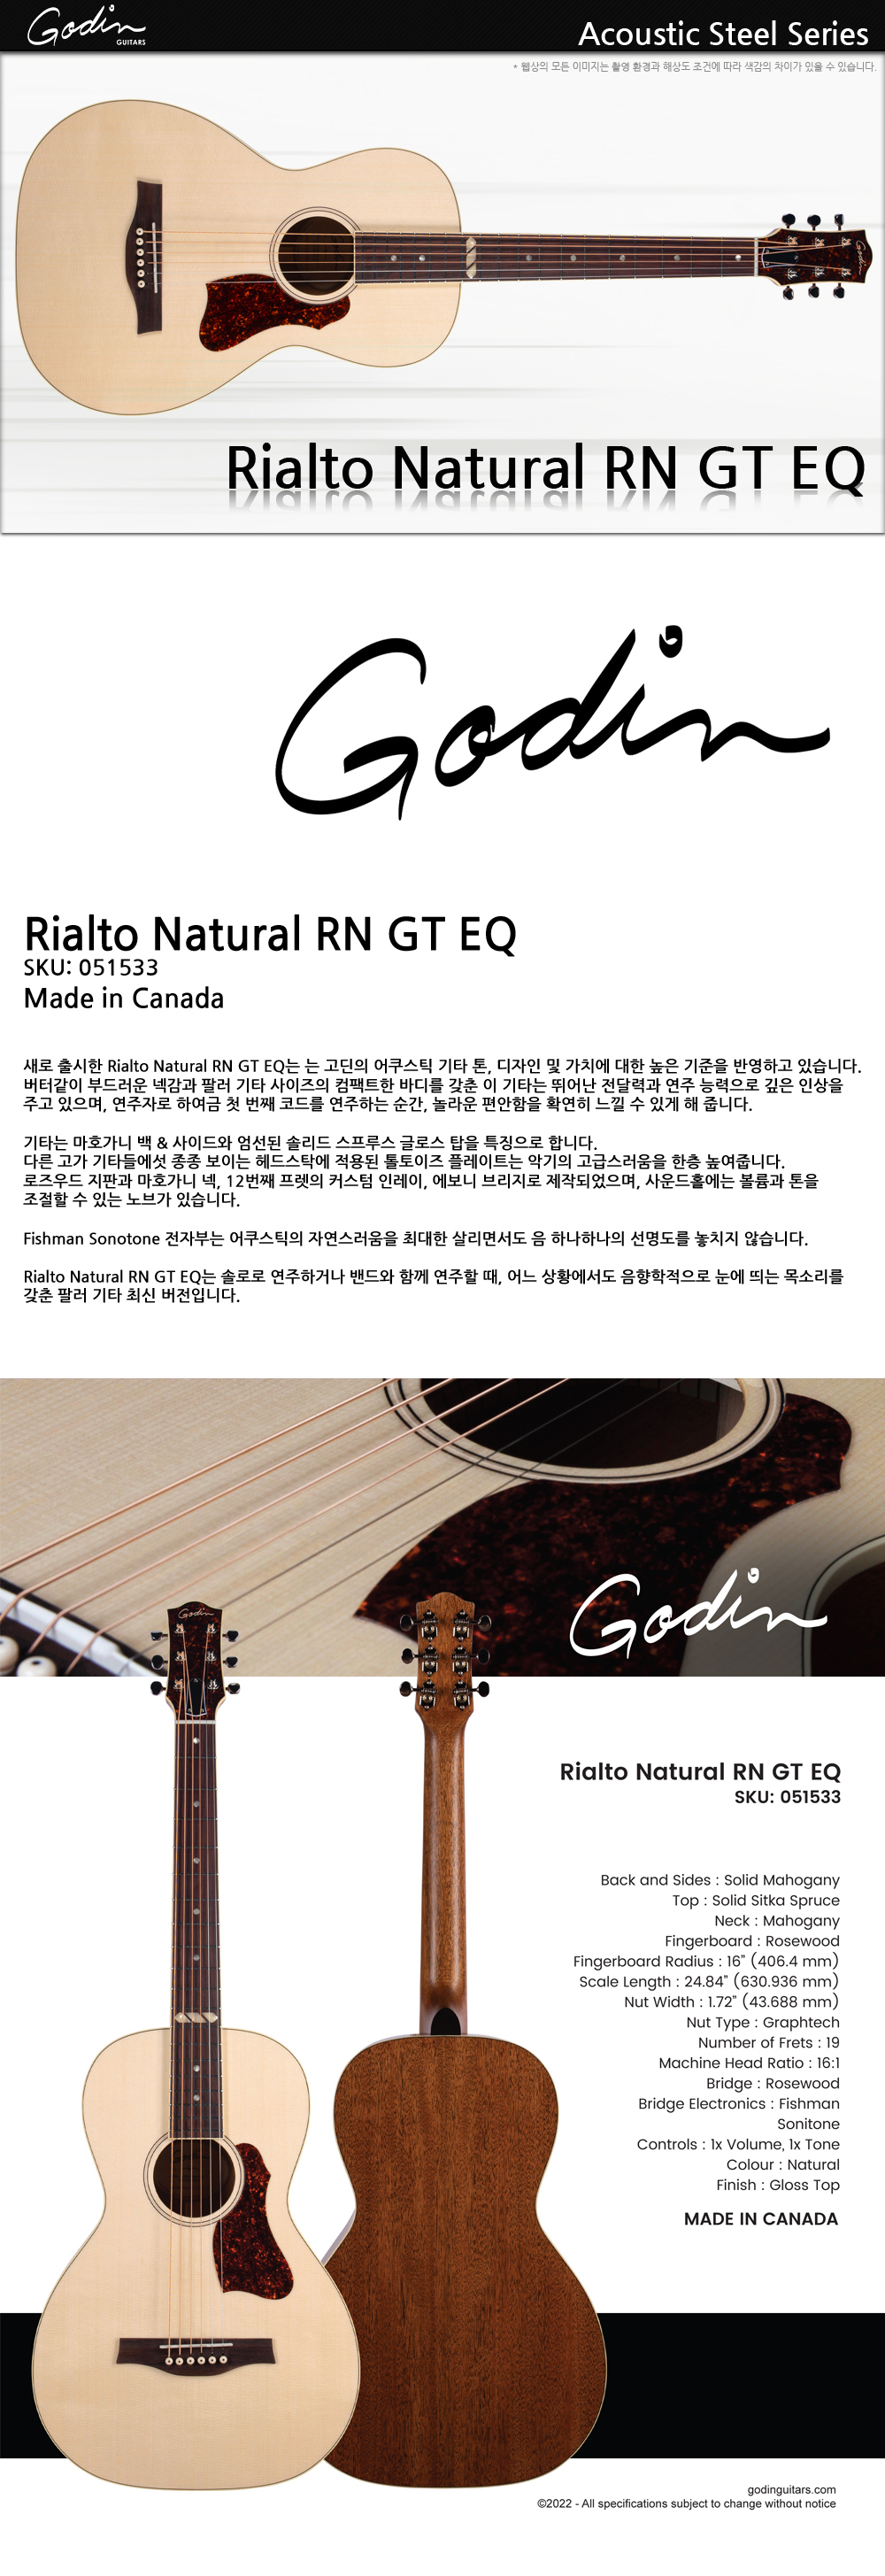 Godin-051533-Rialto-Natural-RN-GT-EQ_1_134609.jpg